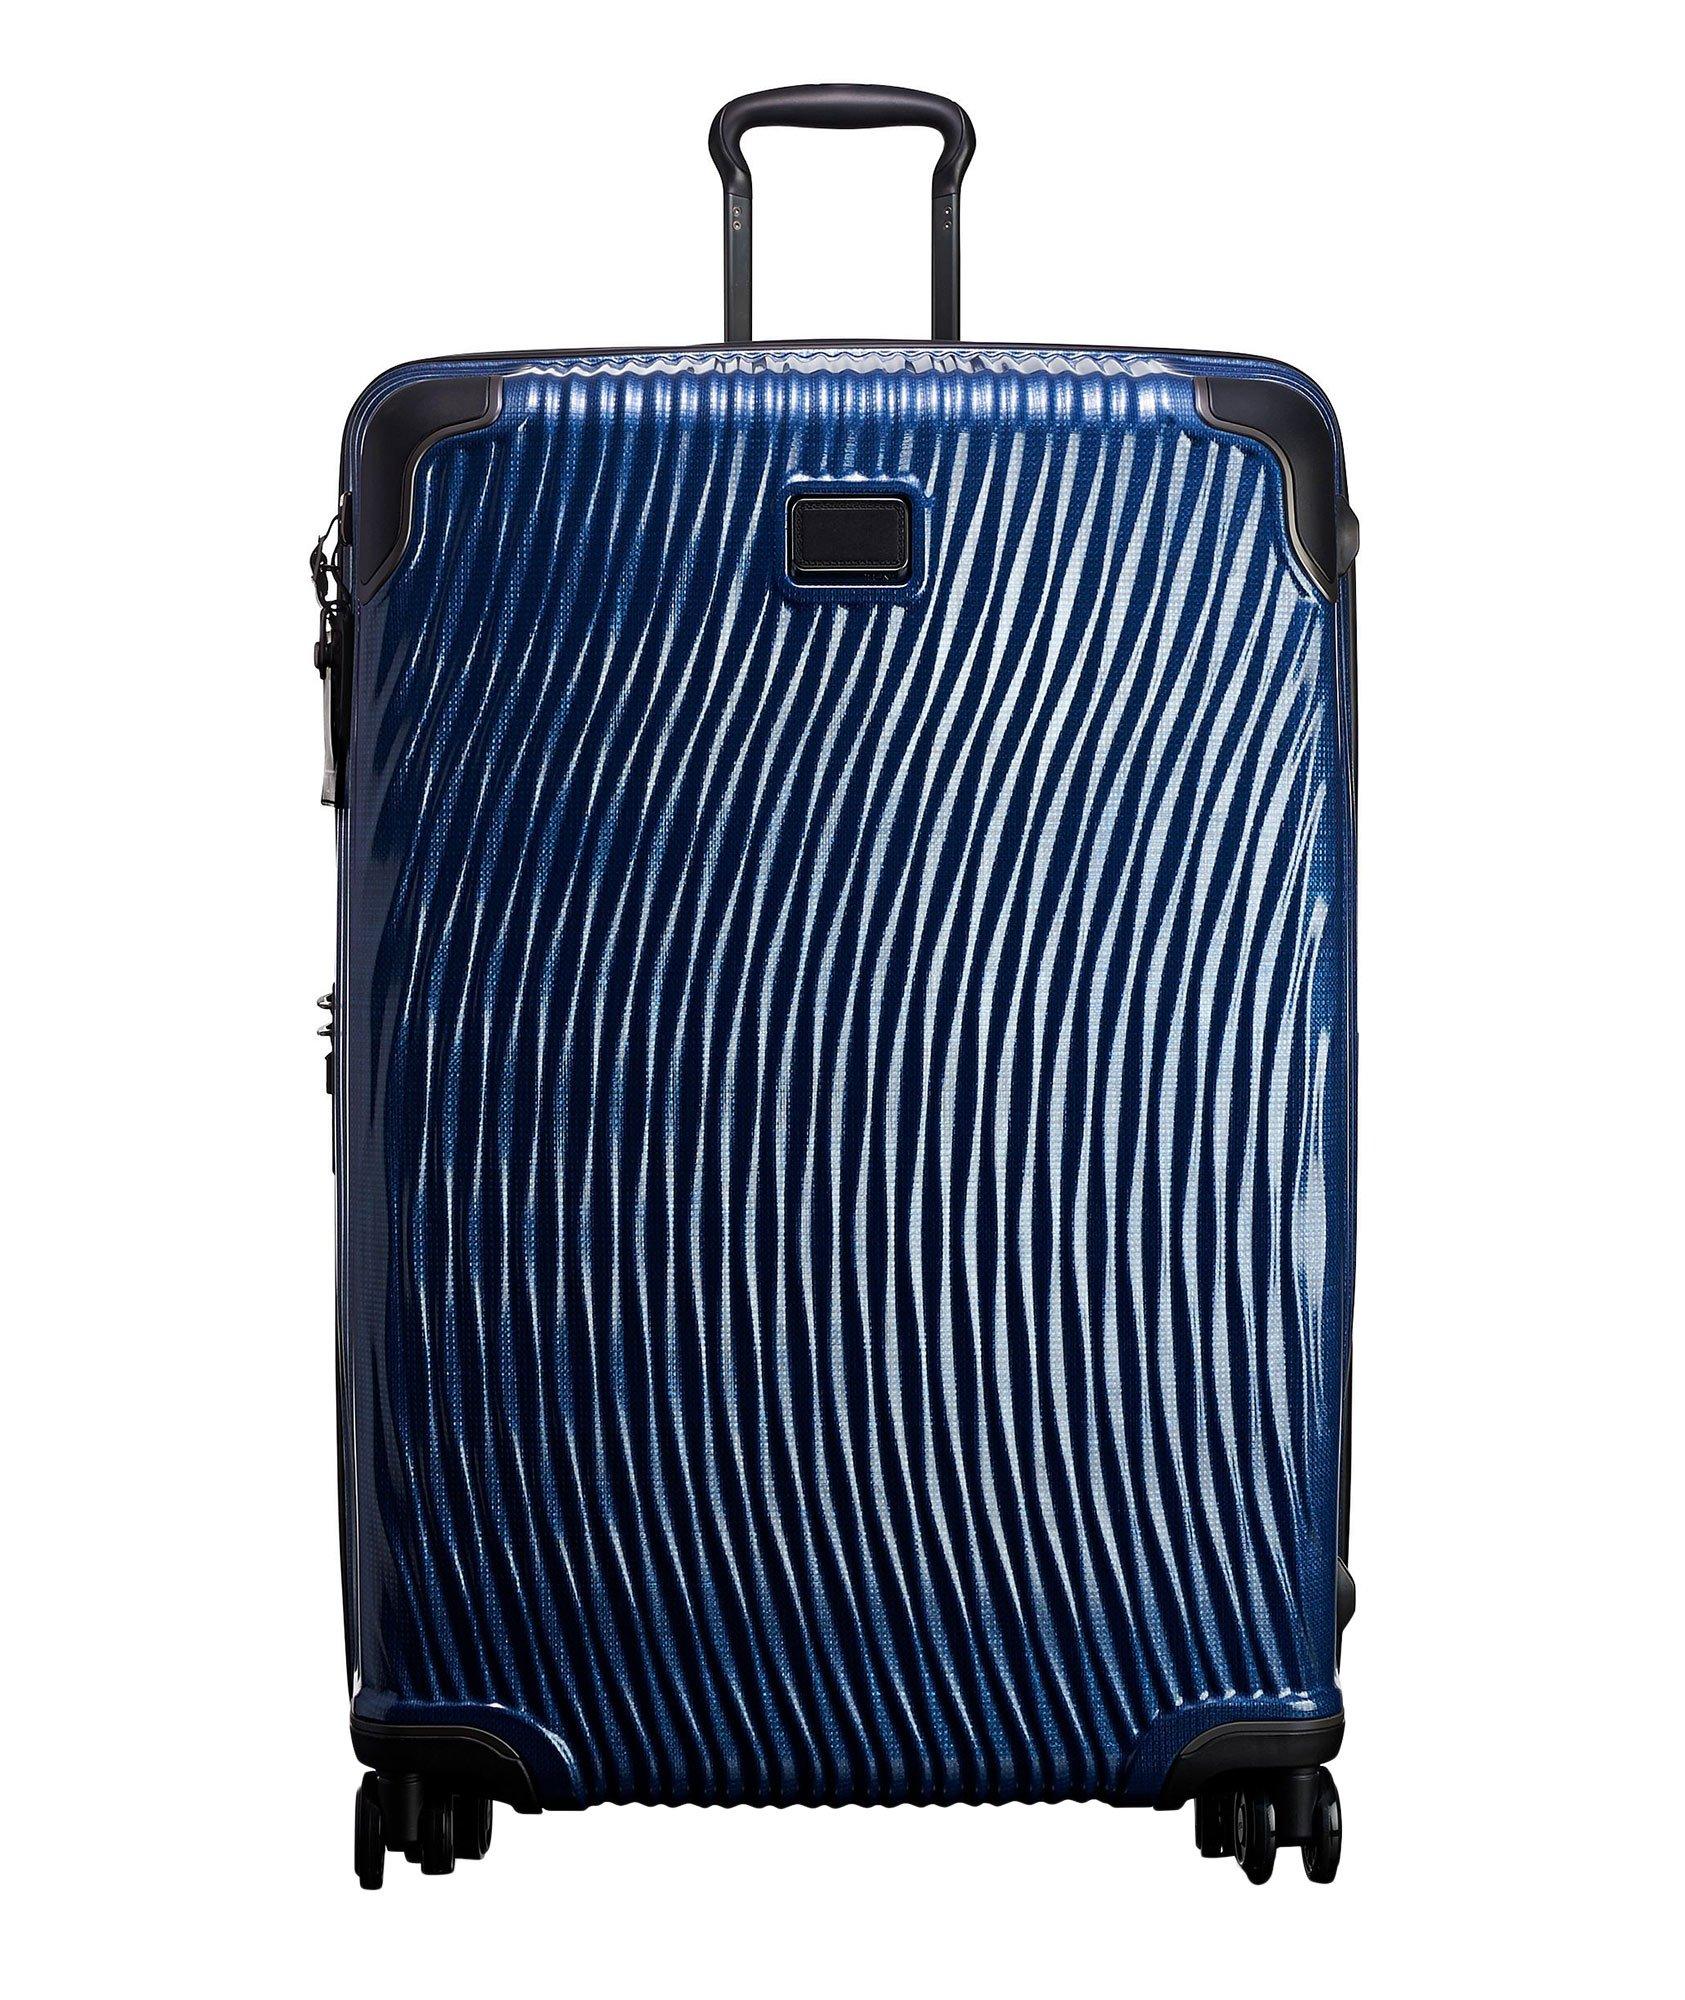 Worldwide Trip Suitcase image 0